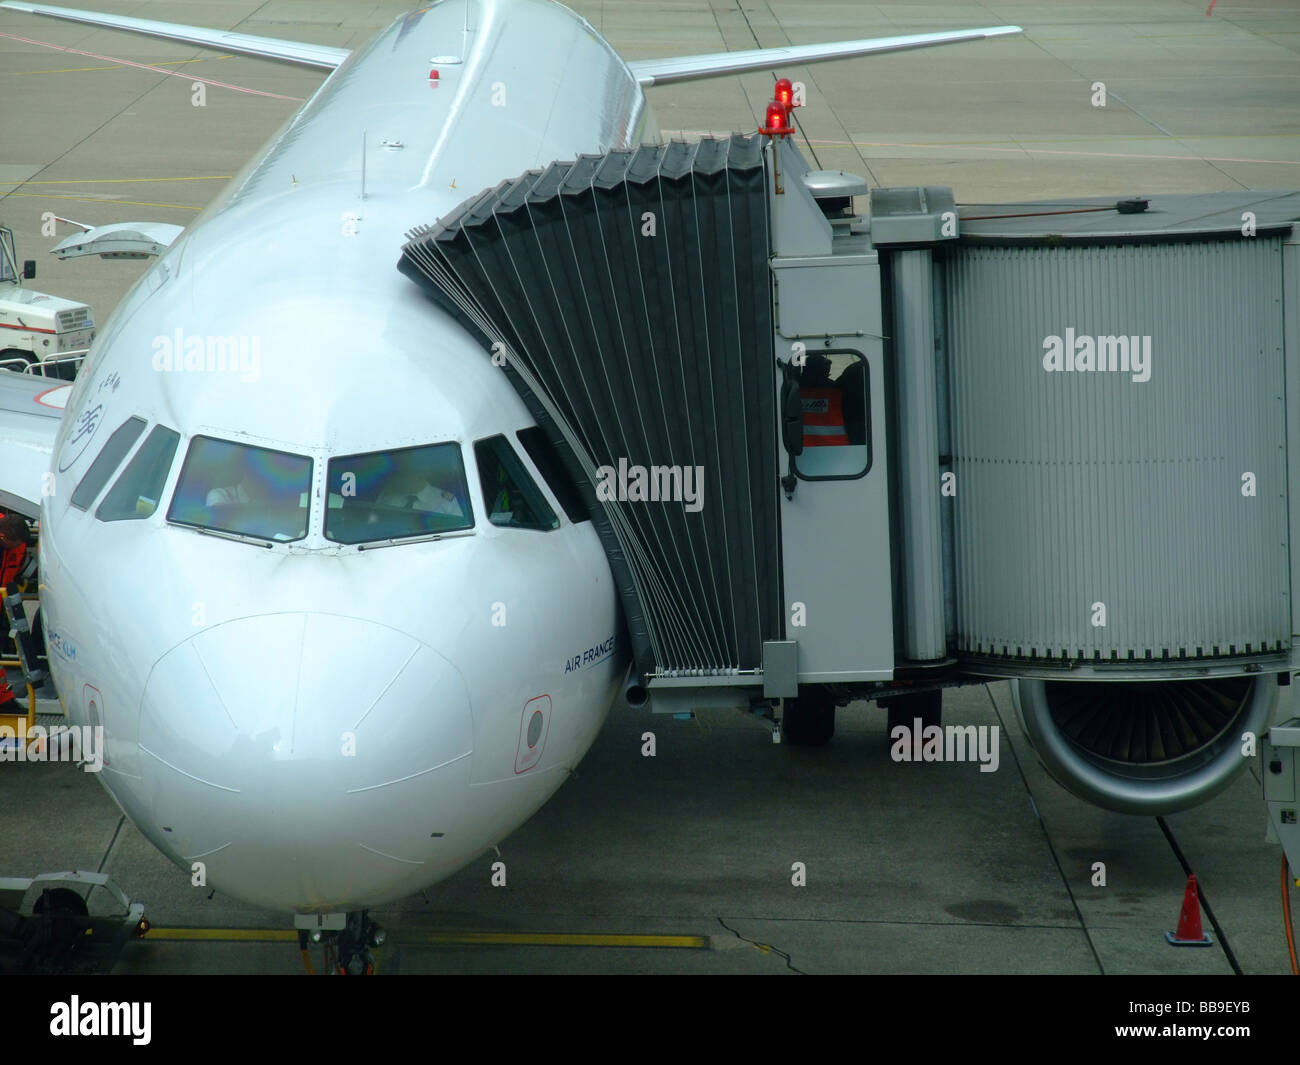 Airbus A320 plane on tarmac with boarding bridge at Dusseldorf International airport Stock Photo